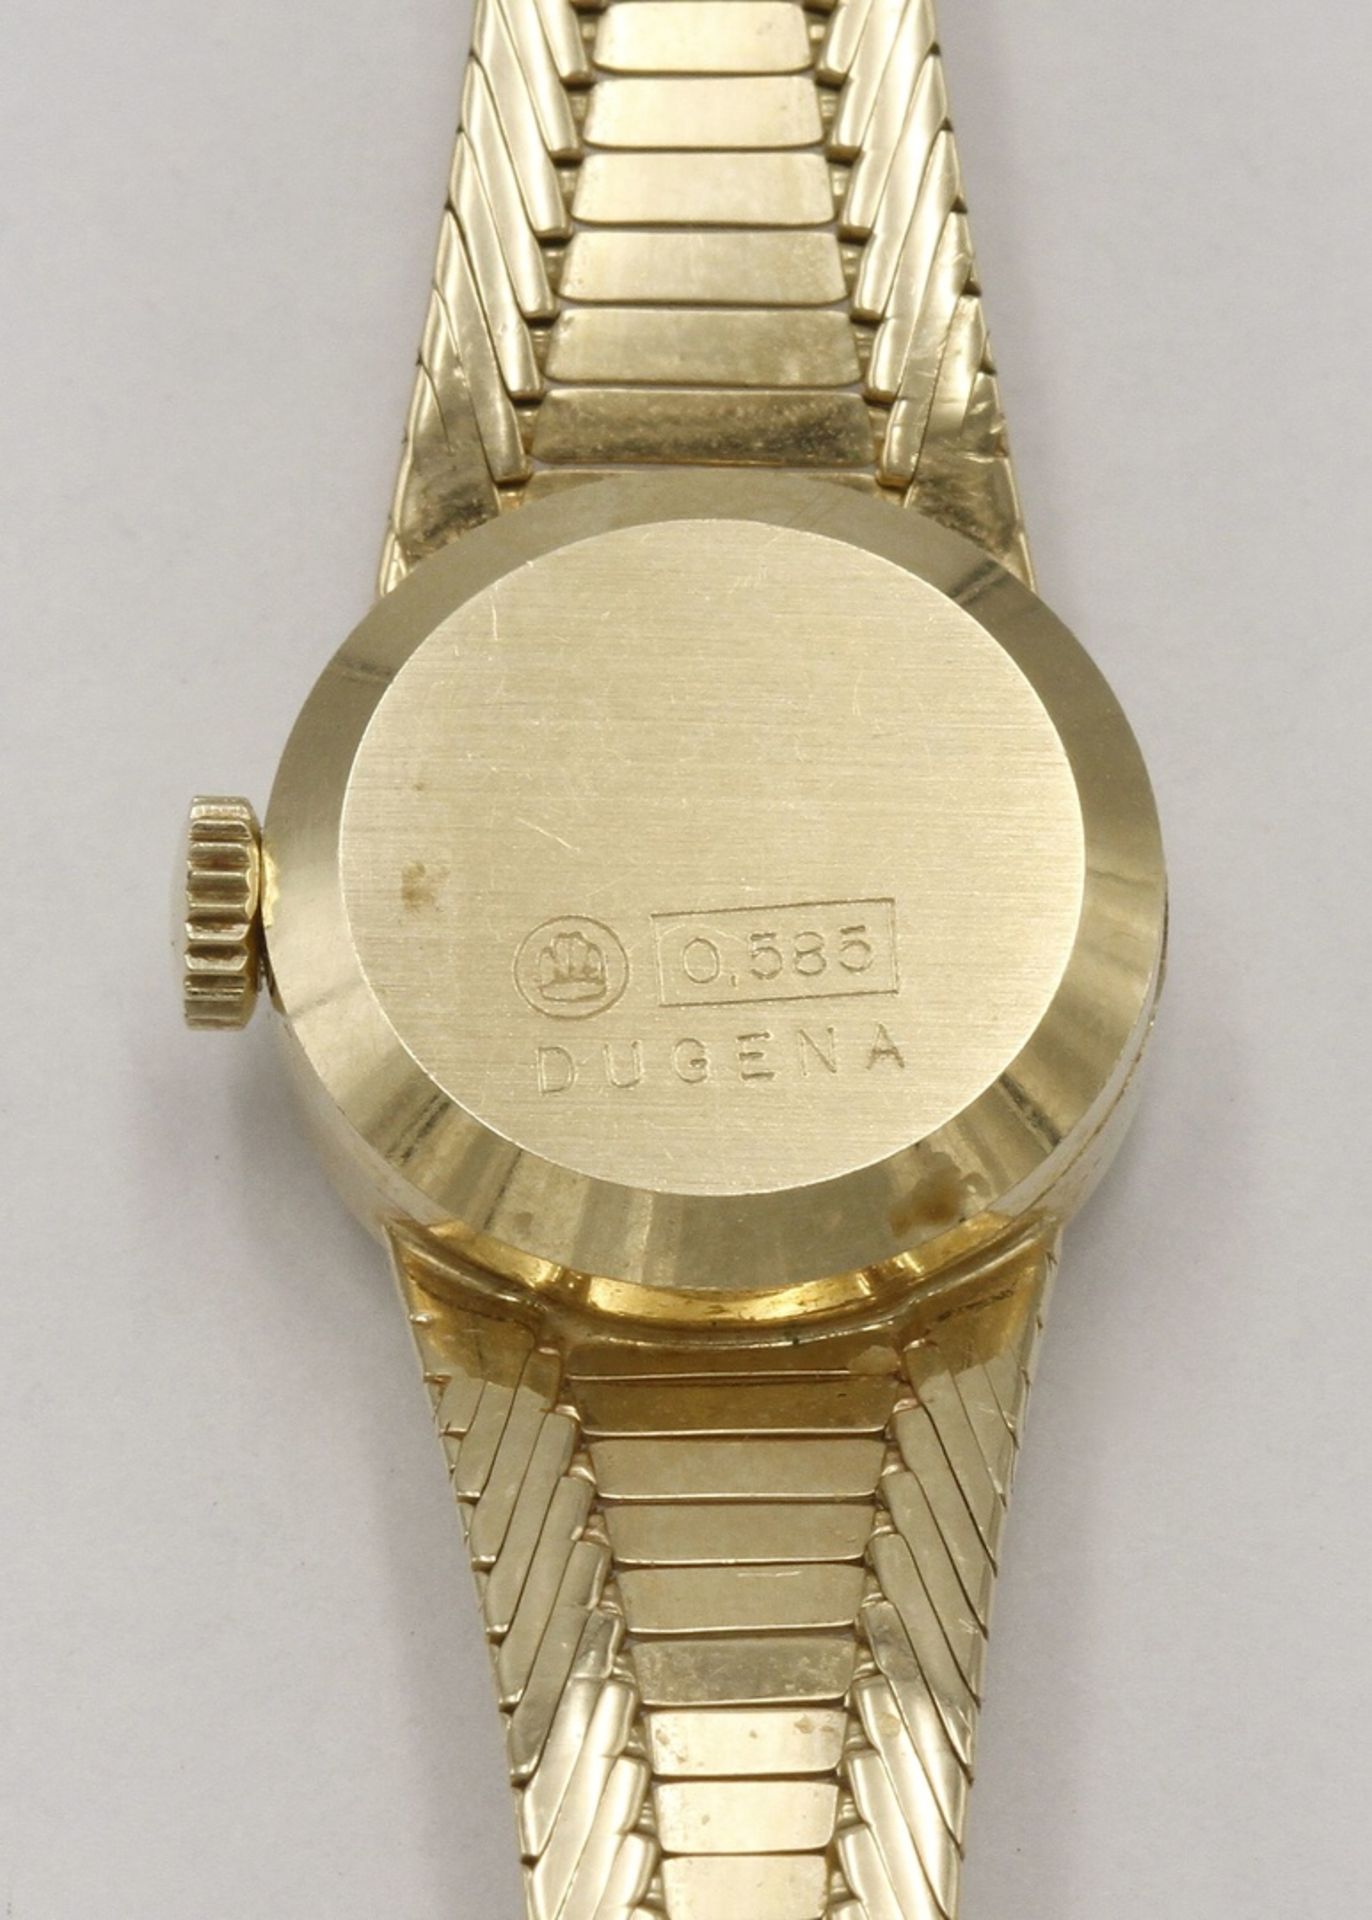 Dugena DamenarmbanduhrArmband und Gehäuse 585/- Gelbgold, 17 Juwelen, Dugena 2130 Uhrwerk - Image 3 of 4